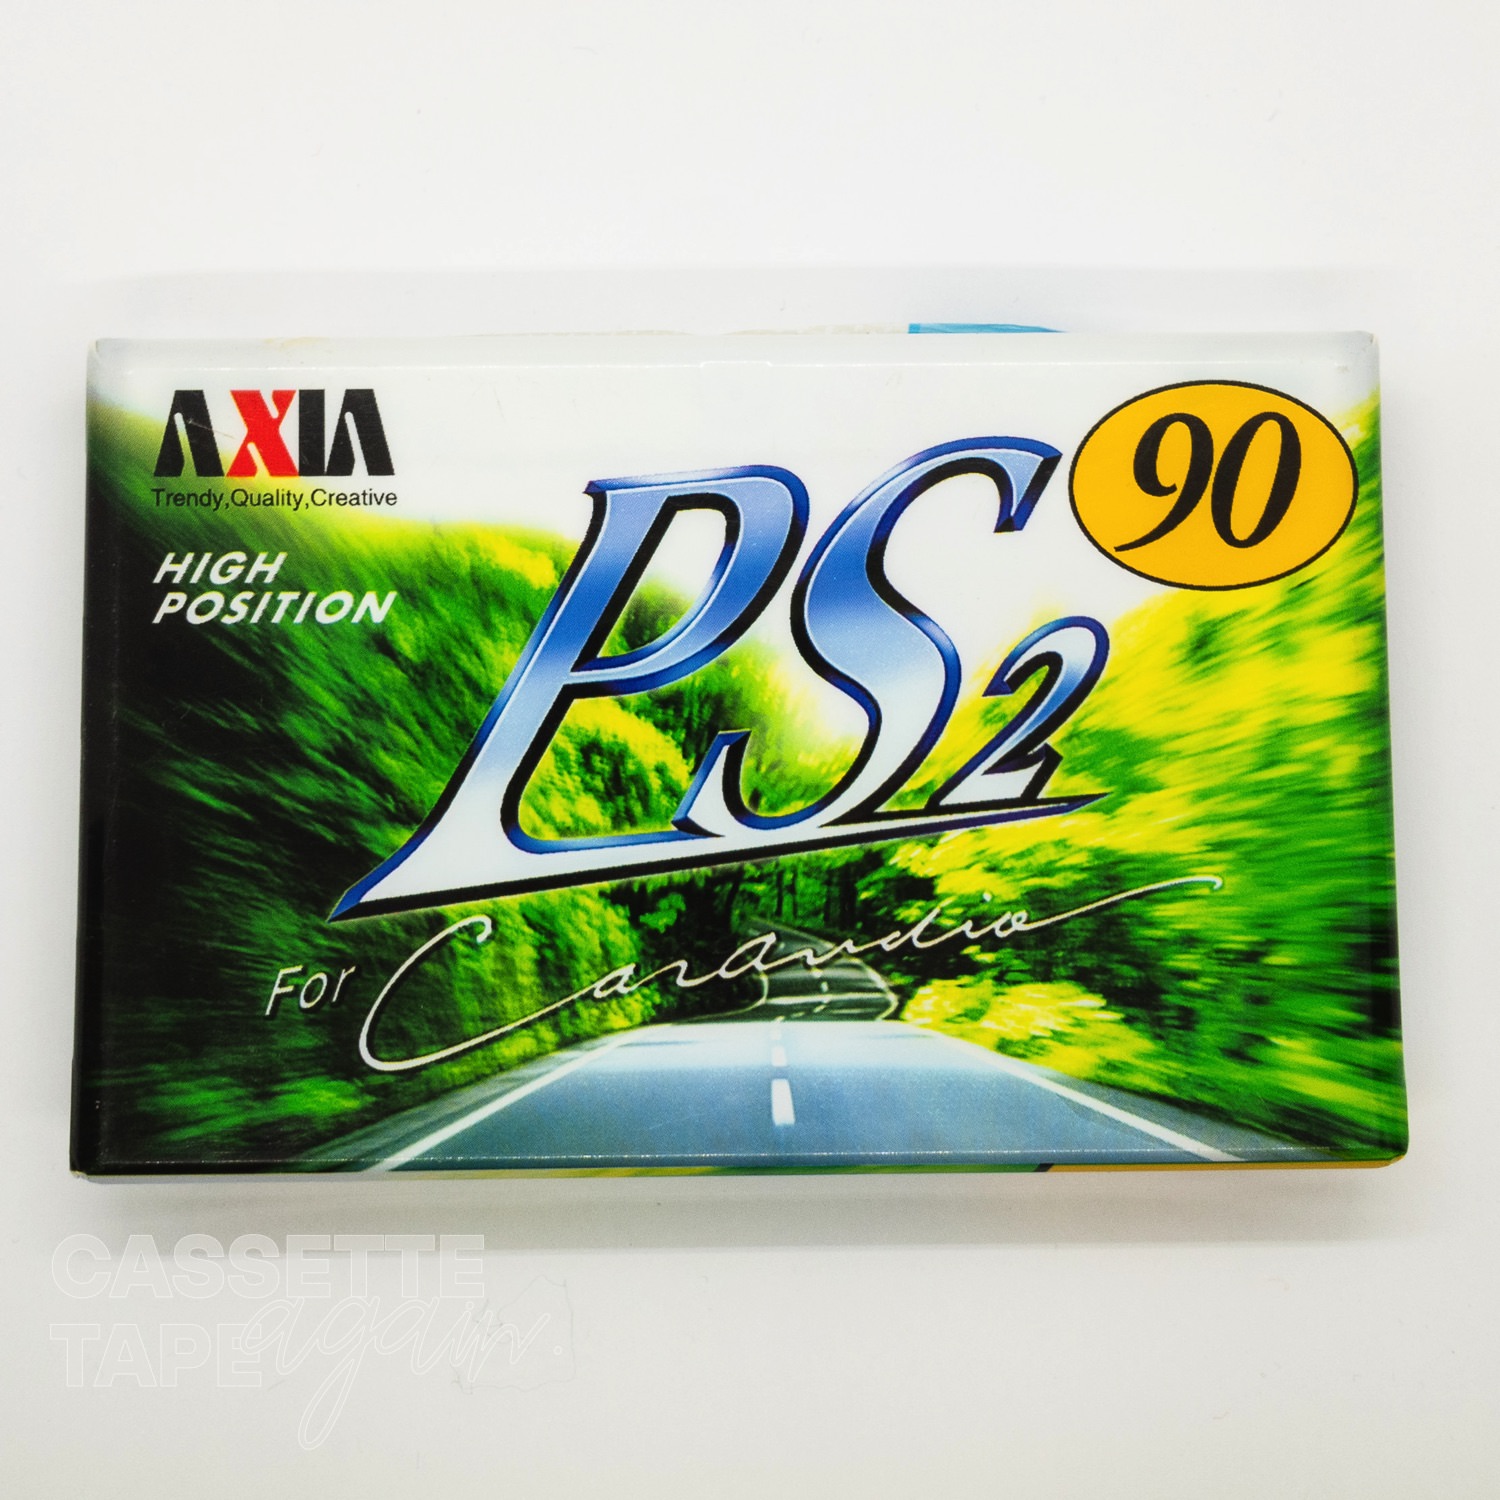 PS2 90 / AXIA/FUJI(ハイポジ) - CASSETTE TAPE again.